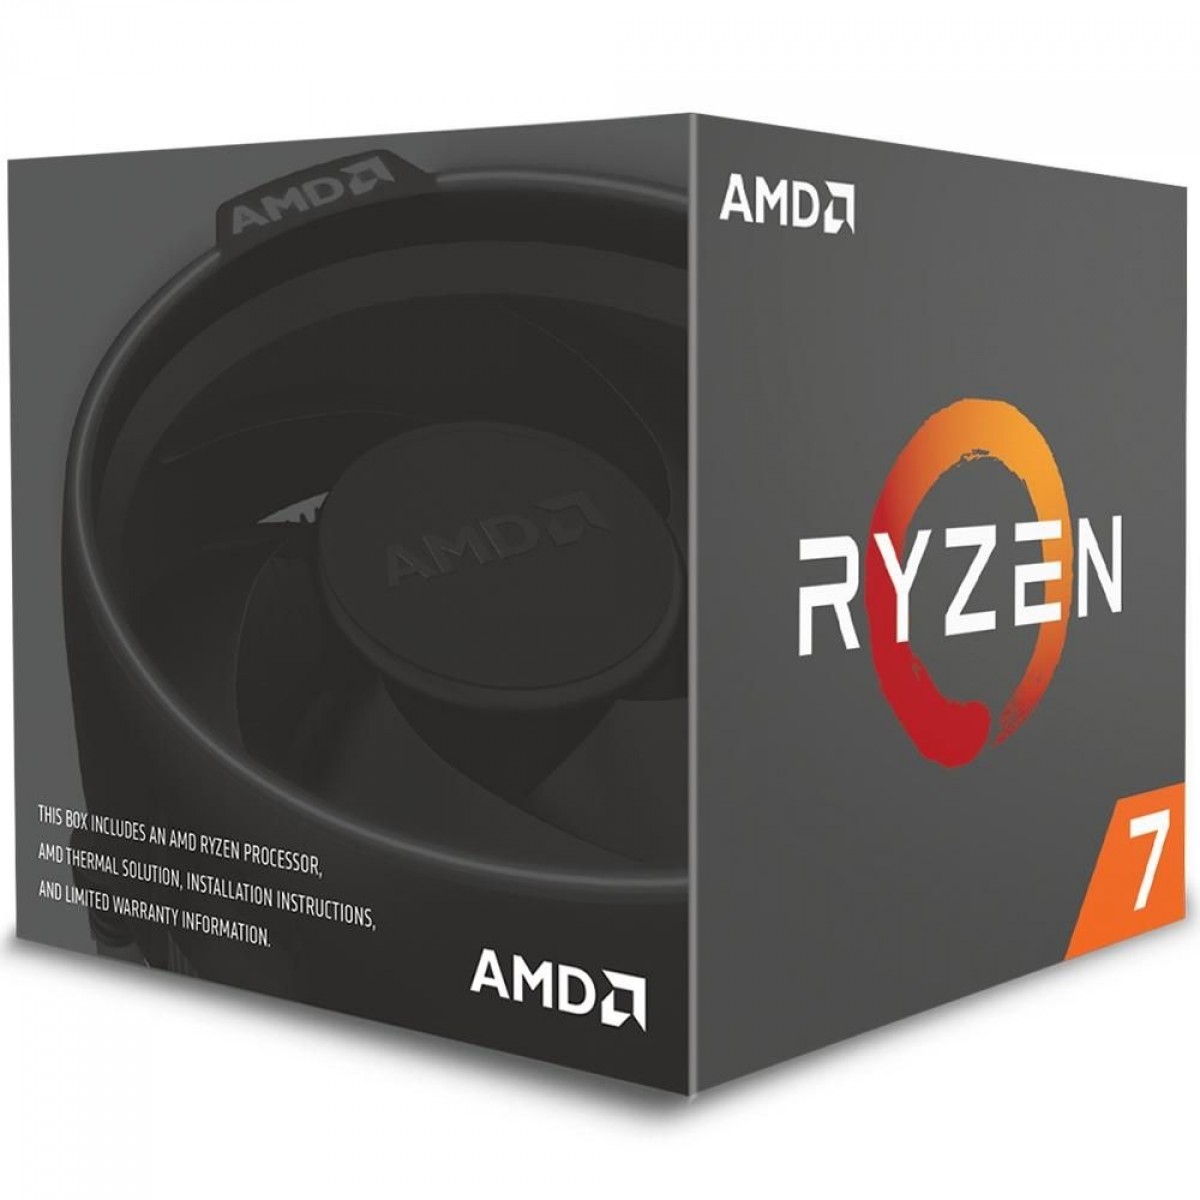 Processador AMD Ryzen 7 2700 3.2GHz (4.1GHz Turbo), 8-Cores 16-Threads, Cooler Wraith Spire com LED, AM4, YD2700BBAFBOX, S/ Video - Open Box